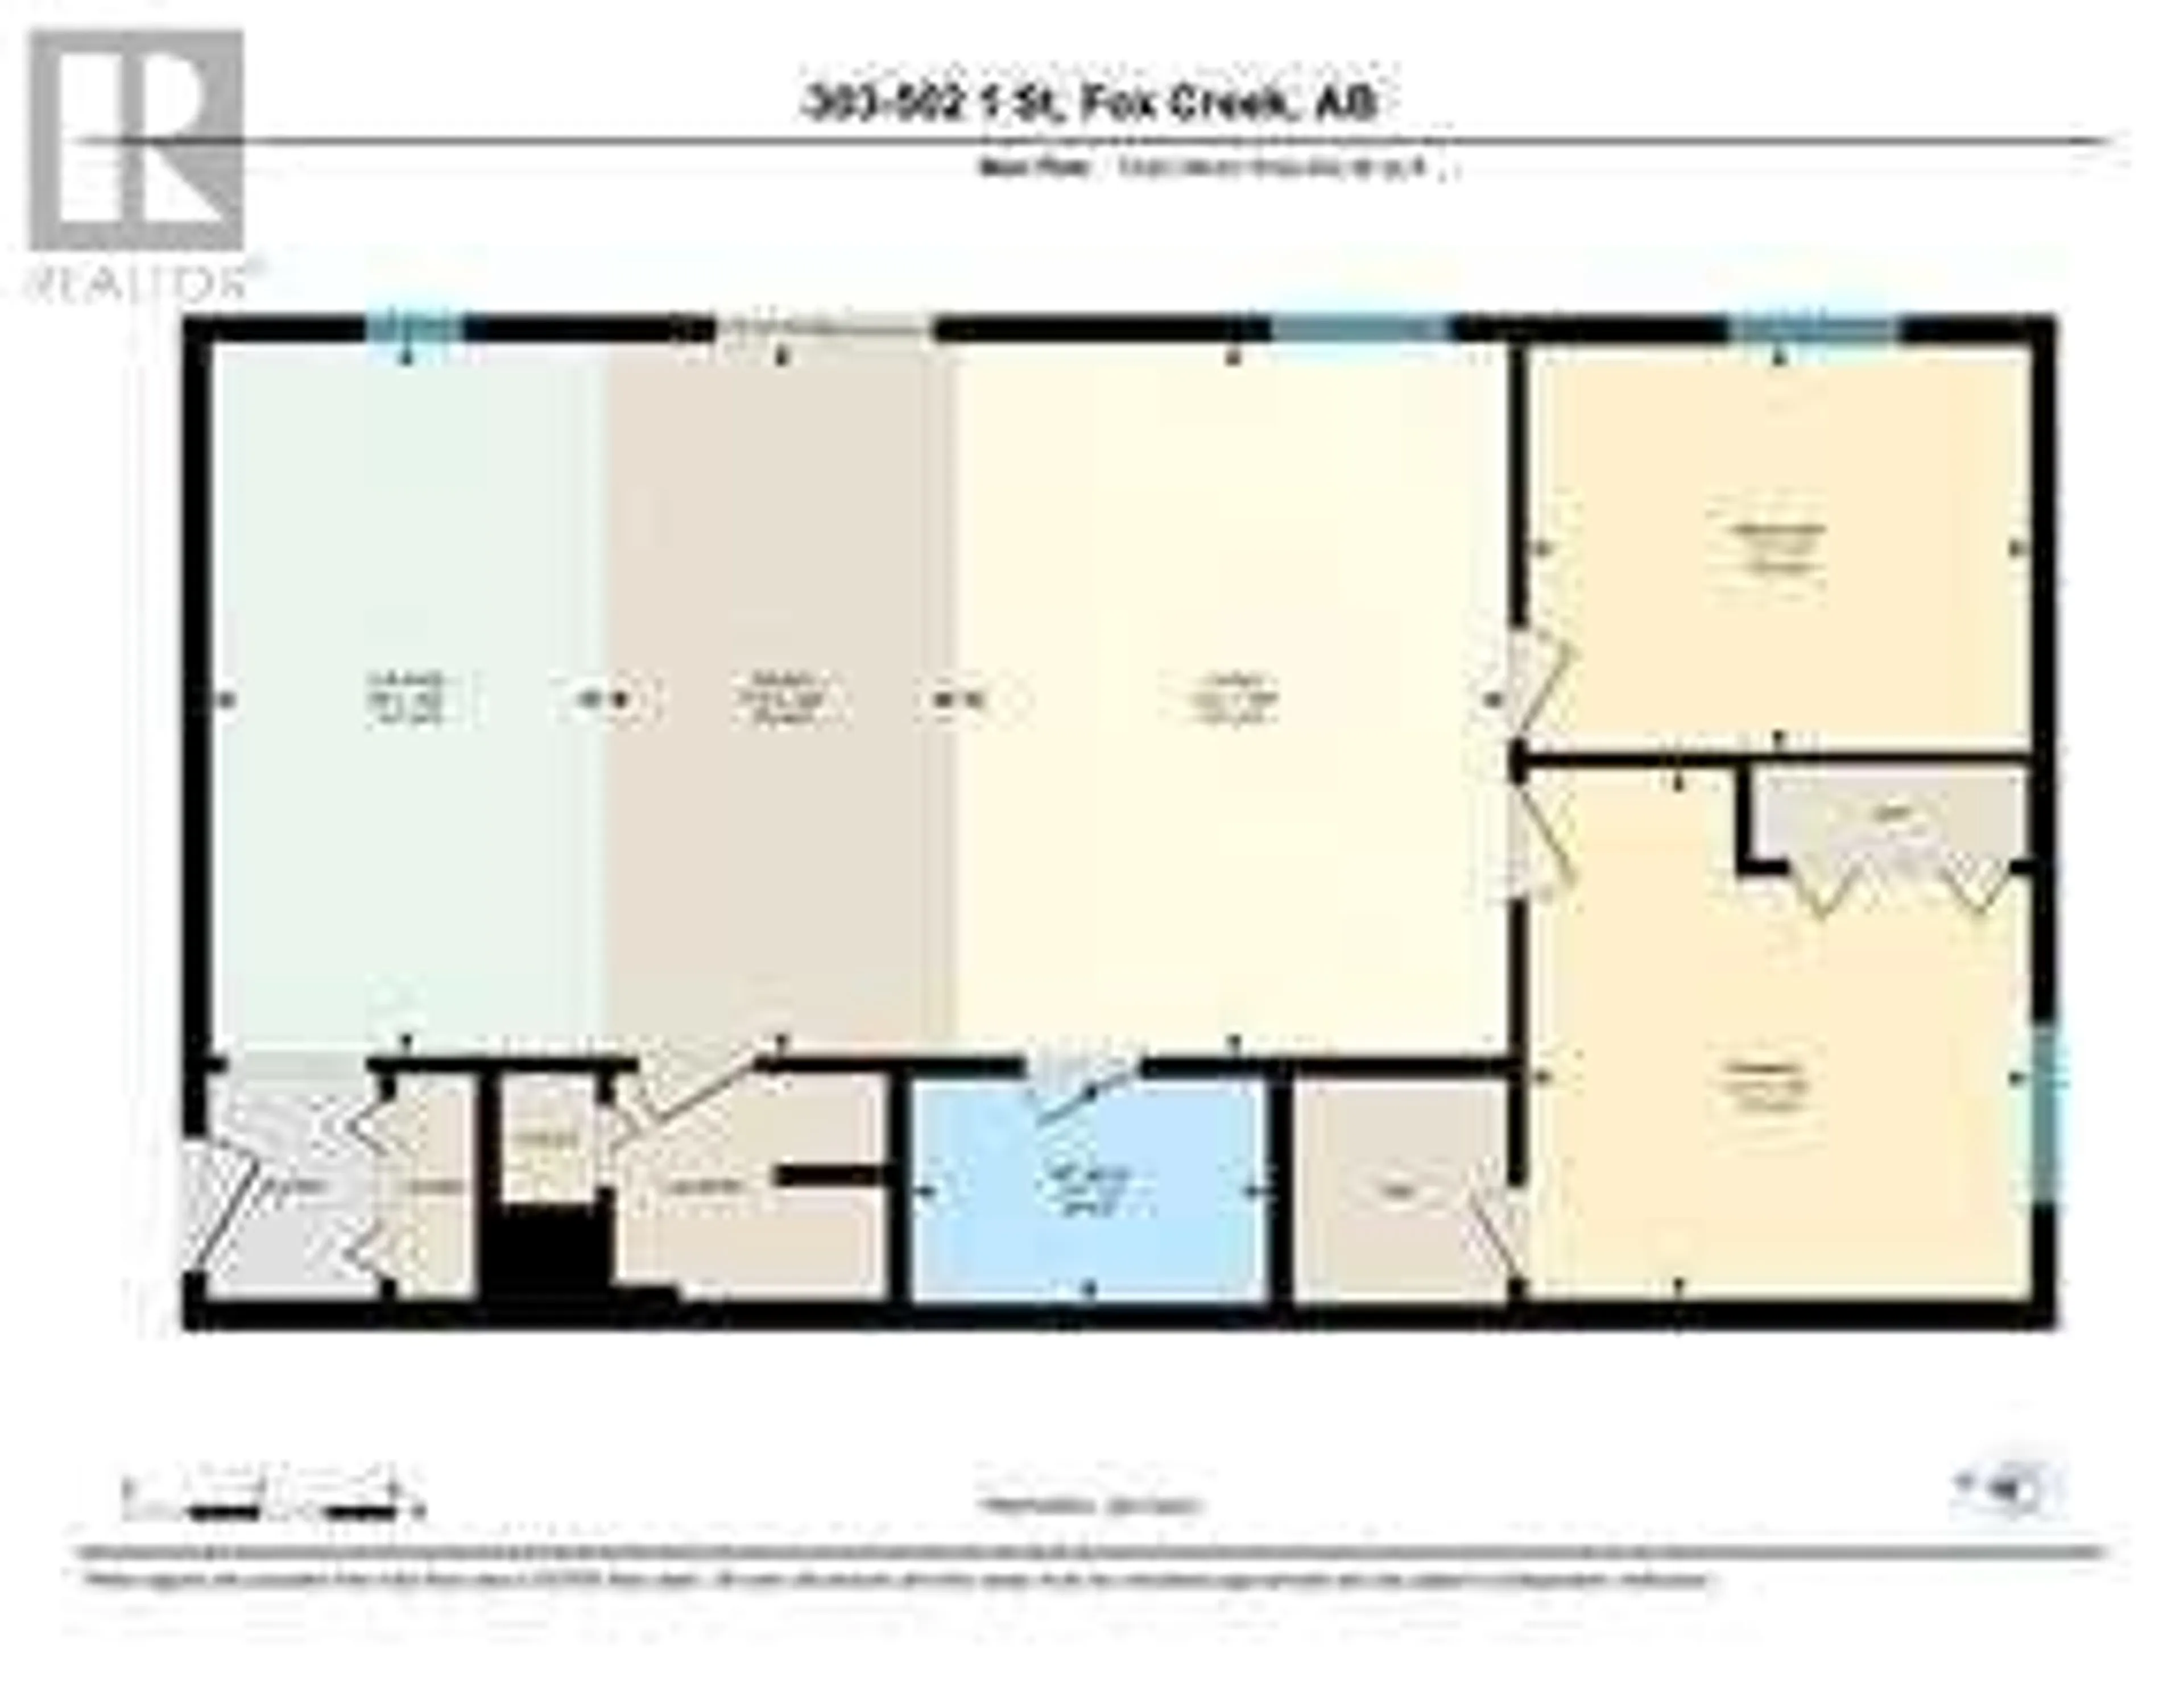 Floor plan for 303 502 1 st, Fox Creek Alberta T0H1P0